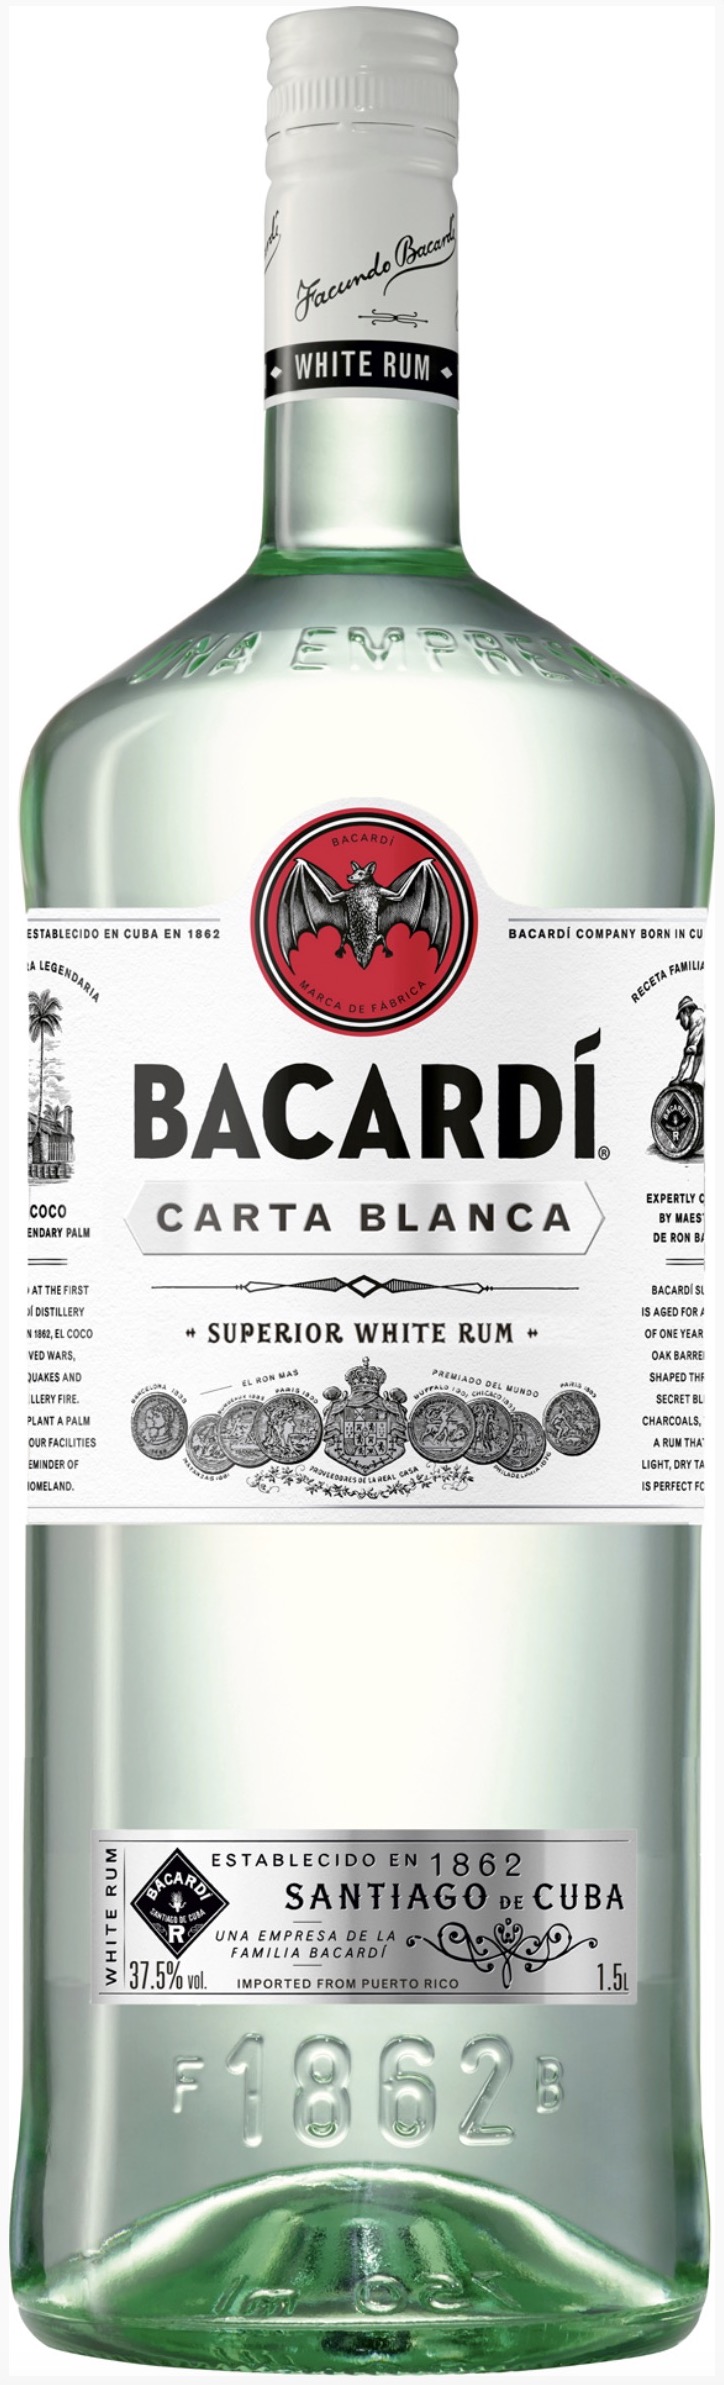 BACARDI Carta Blanca Rum 37,5% 1,5L